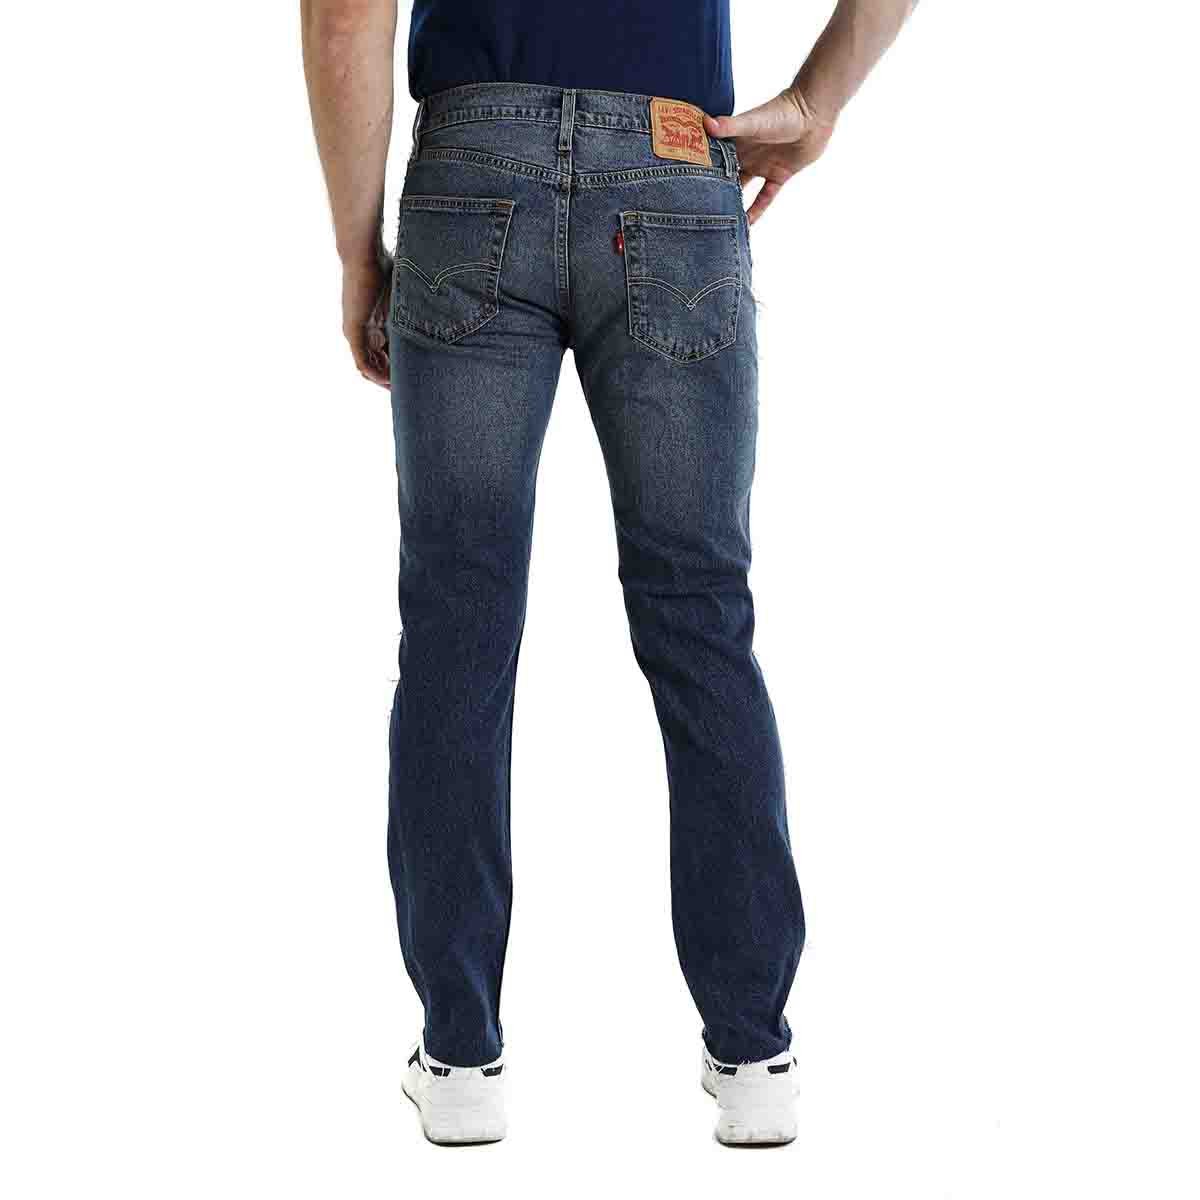 Jeans 511 Slim Fit Levis para Caballero